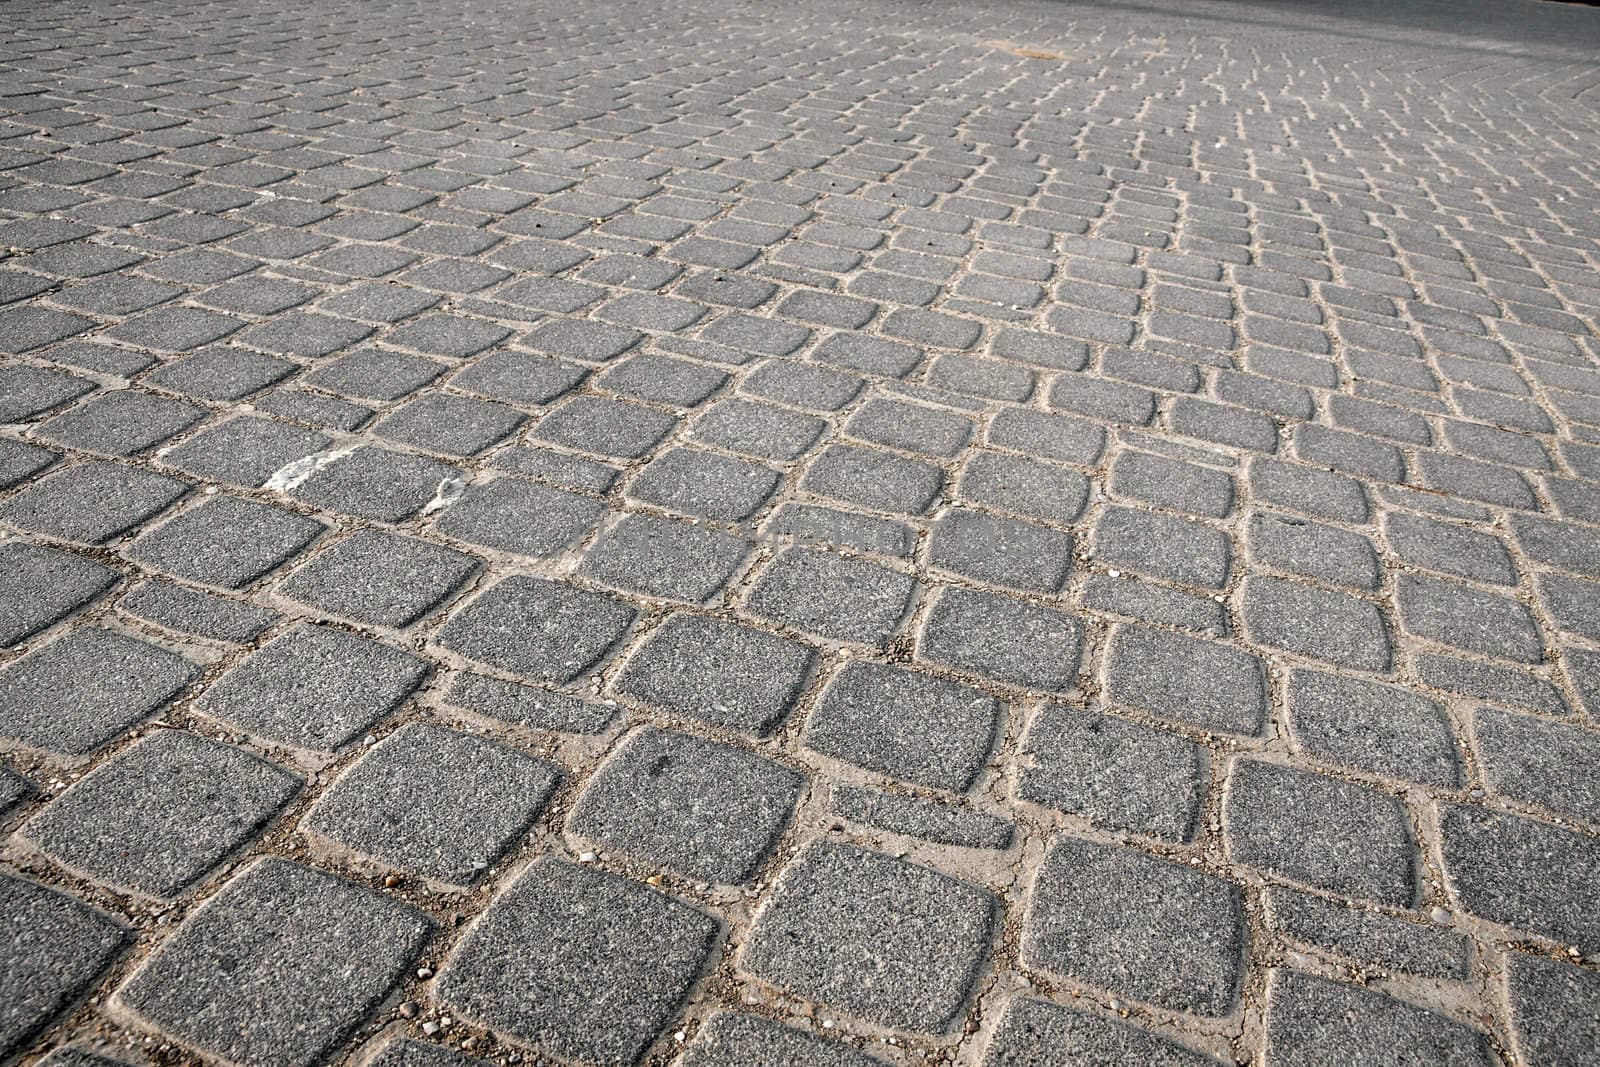 Stone pavement texture of an urban street